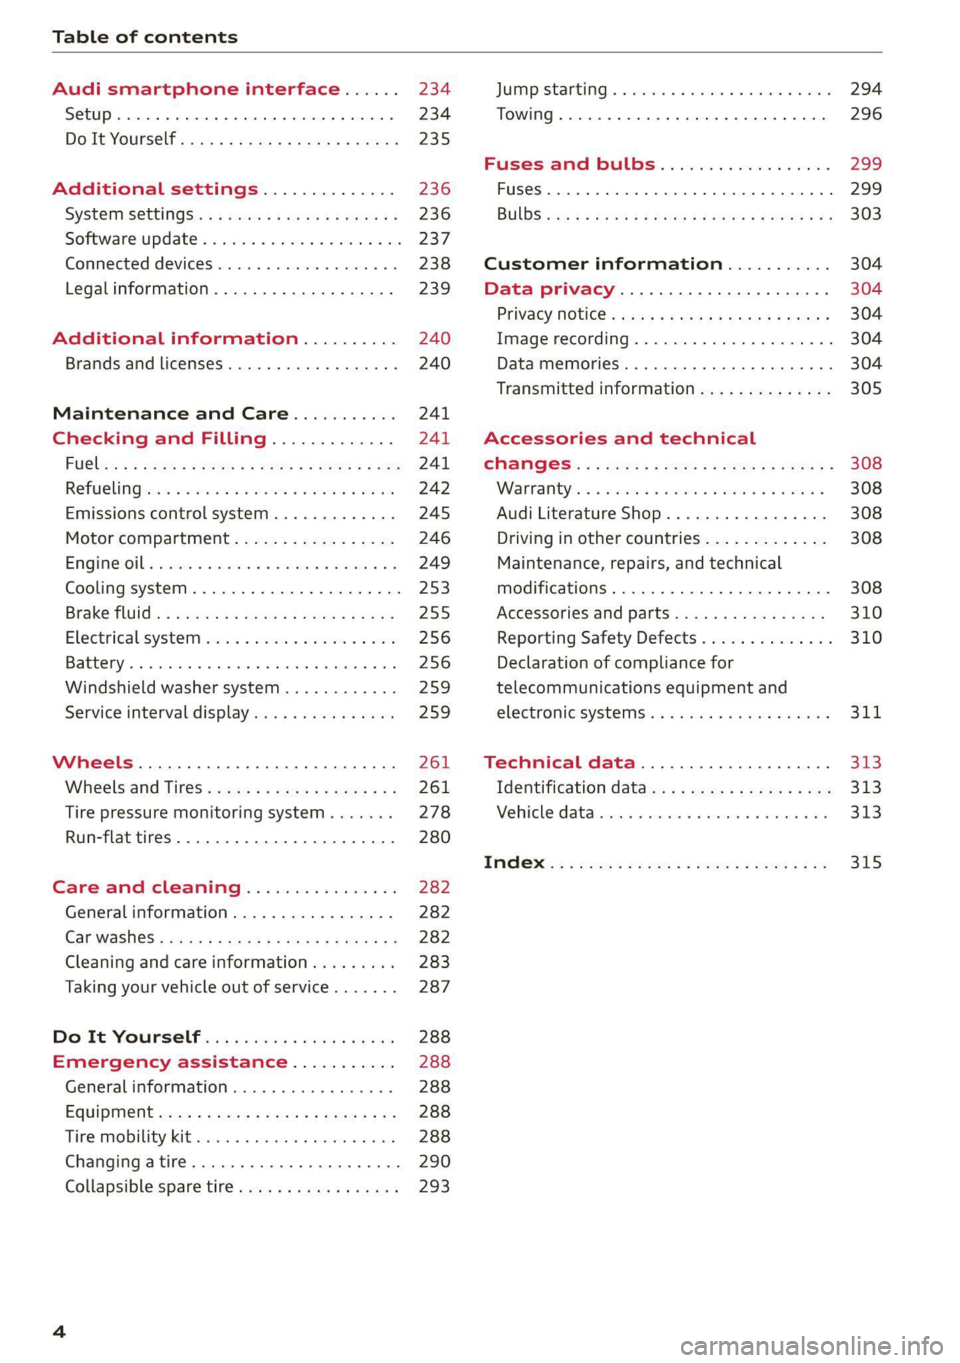 AUDI Q5 2021  Owner´s Manual Table of contents 
  
Audi smartphone interface...... 234 
Setup... eee eee eee eee 234 
DOIt YOURSELT sce 5 s woes se meee 5 2 ee 235 
Additional settings.............. 236 
System Settings: : s eens